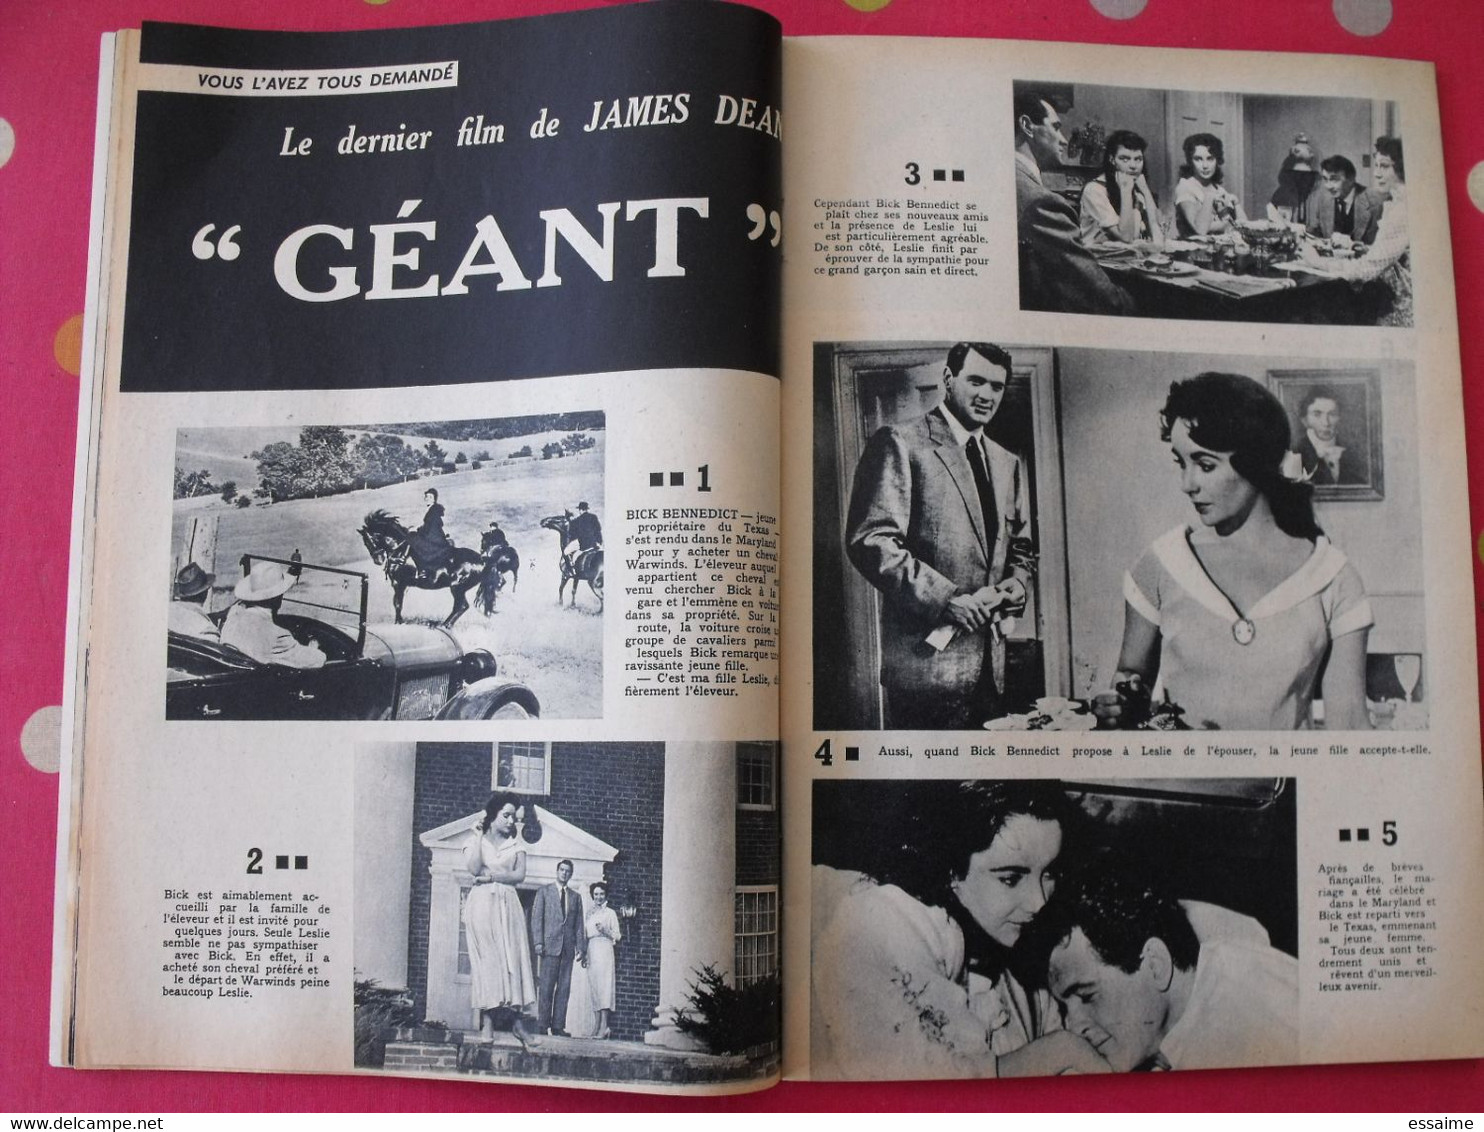 revue Jeunesse cinéma n° 12 de 1958. audrey hepburn gil vidal ingrid bergman james dean maria schell montand